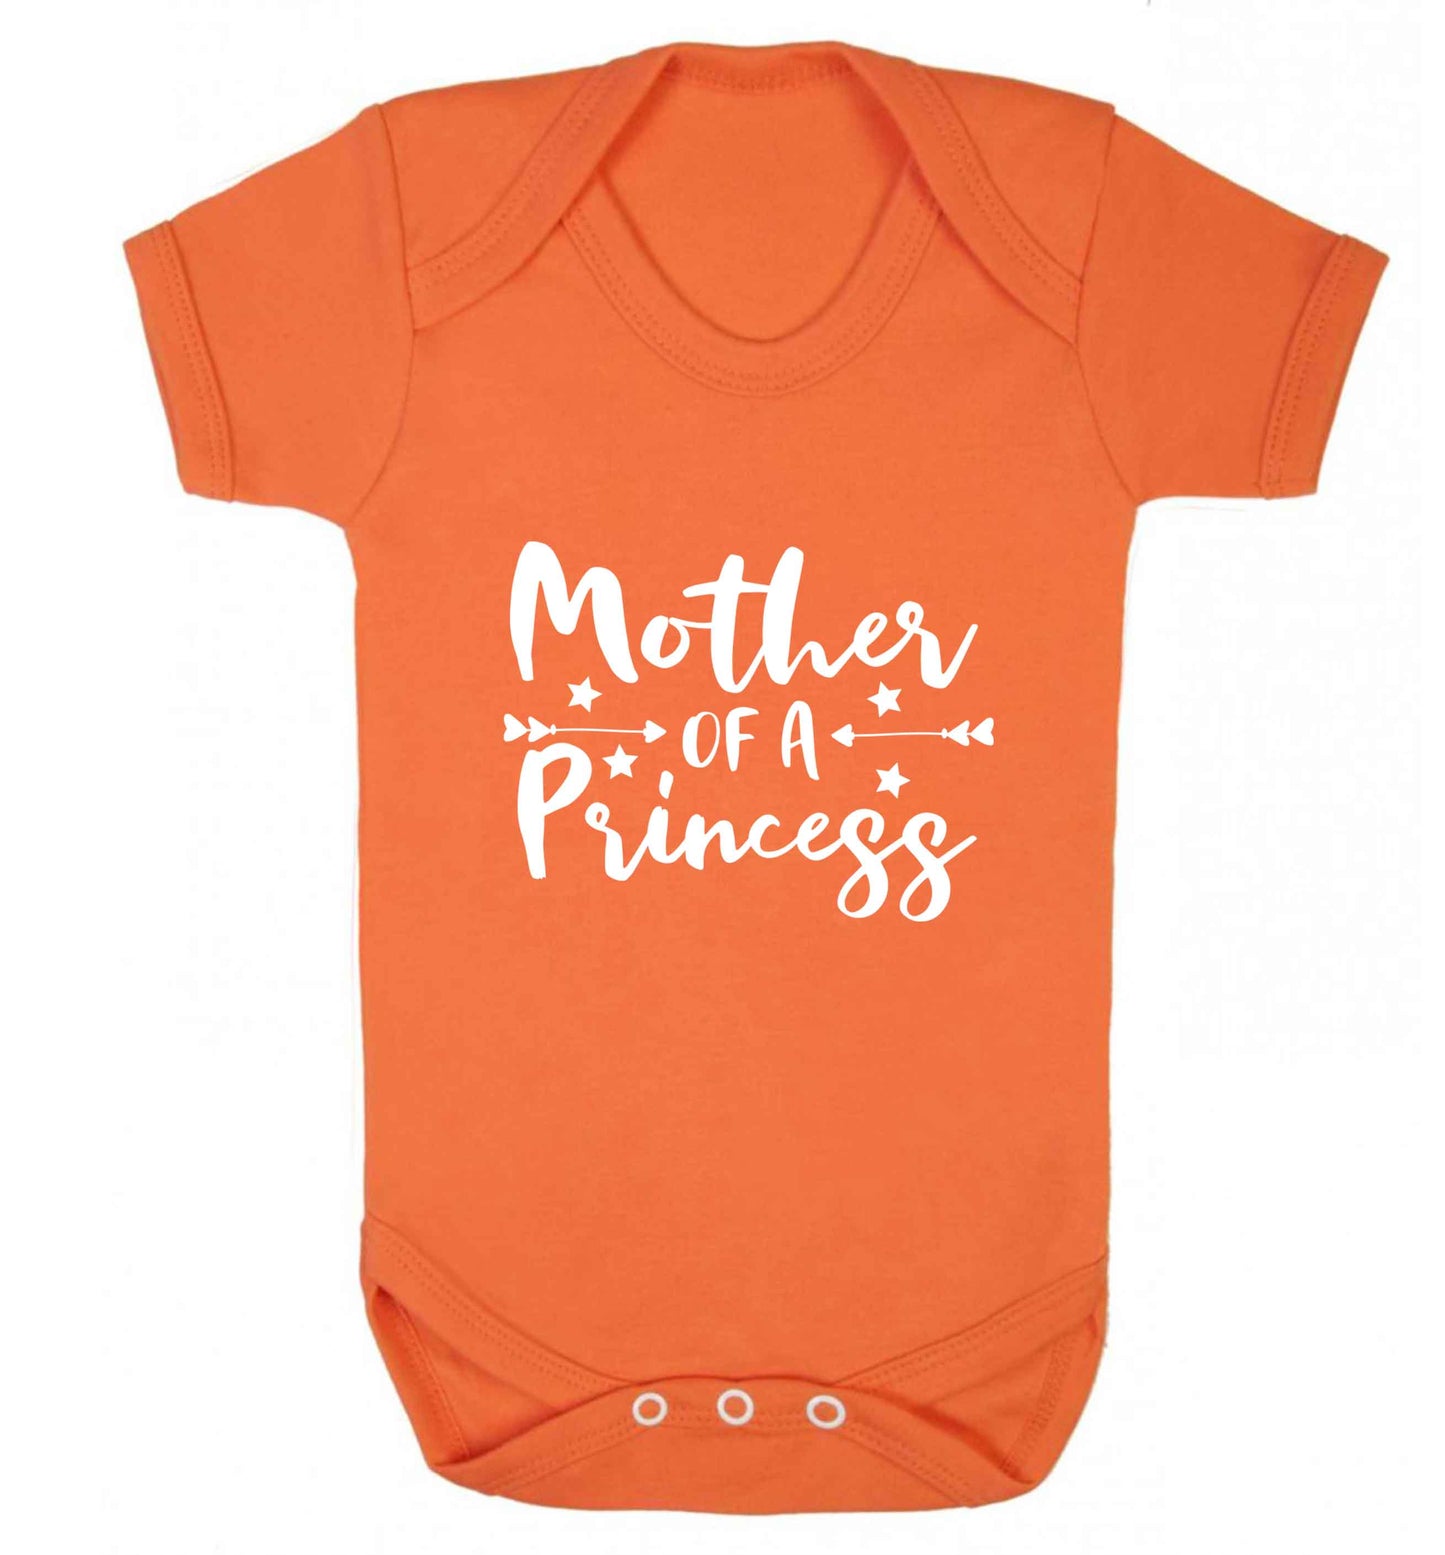 Mother of a princess baby vest orange 18-24 months